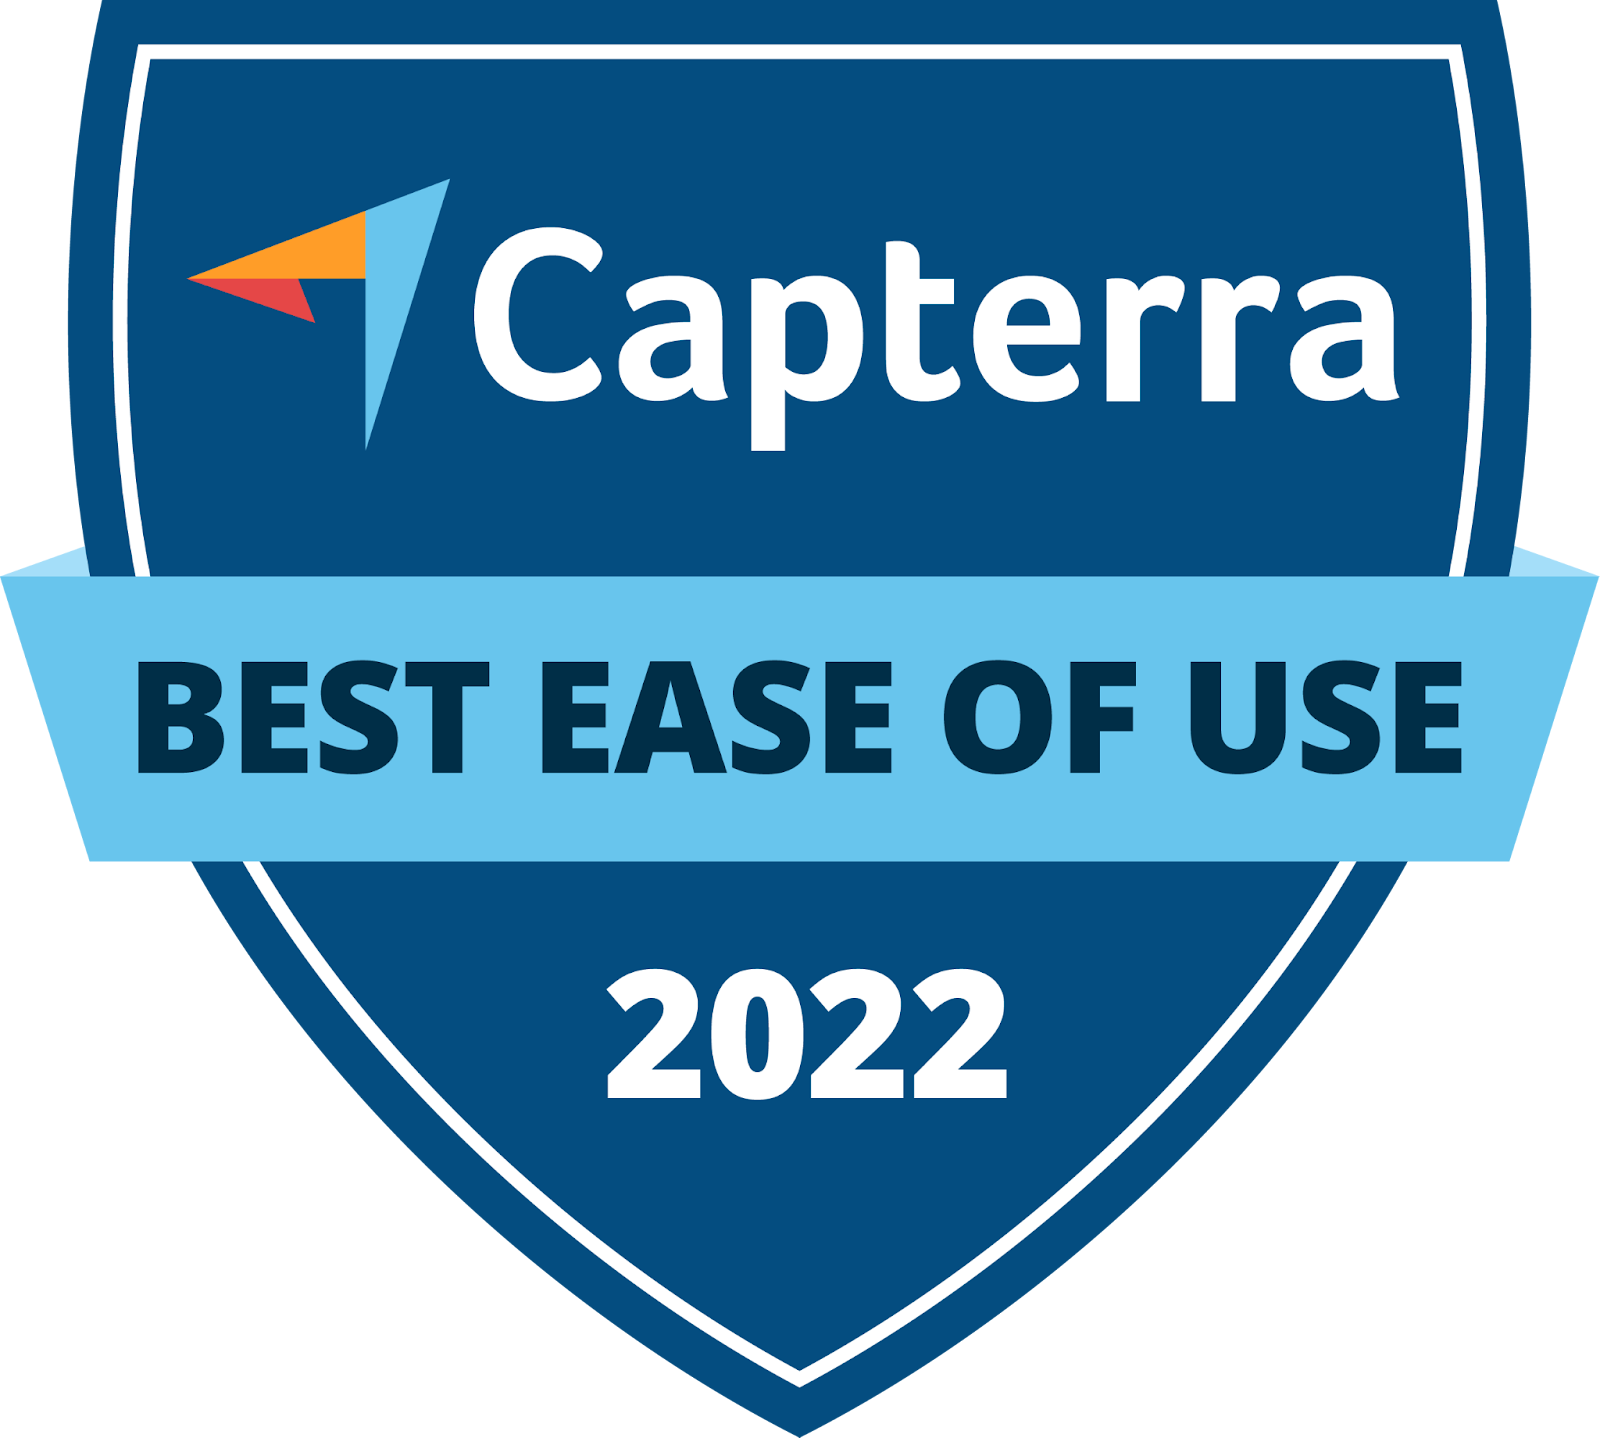 Capterra best ease of use award